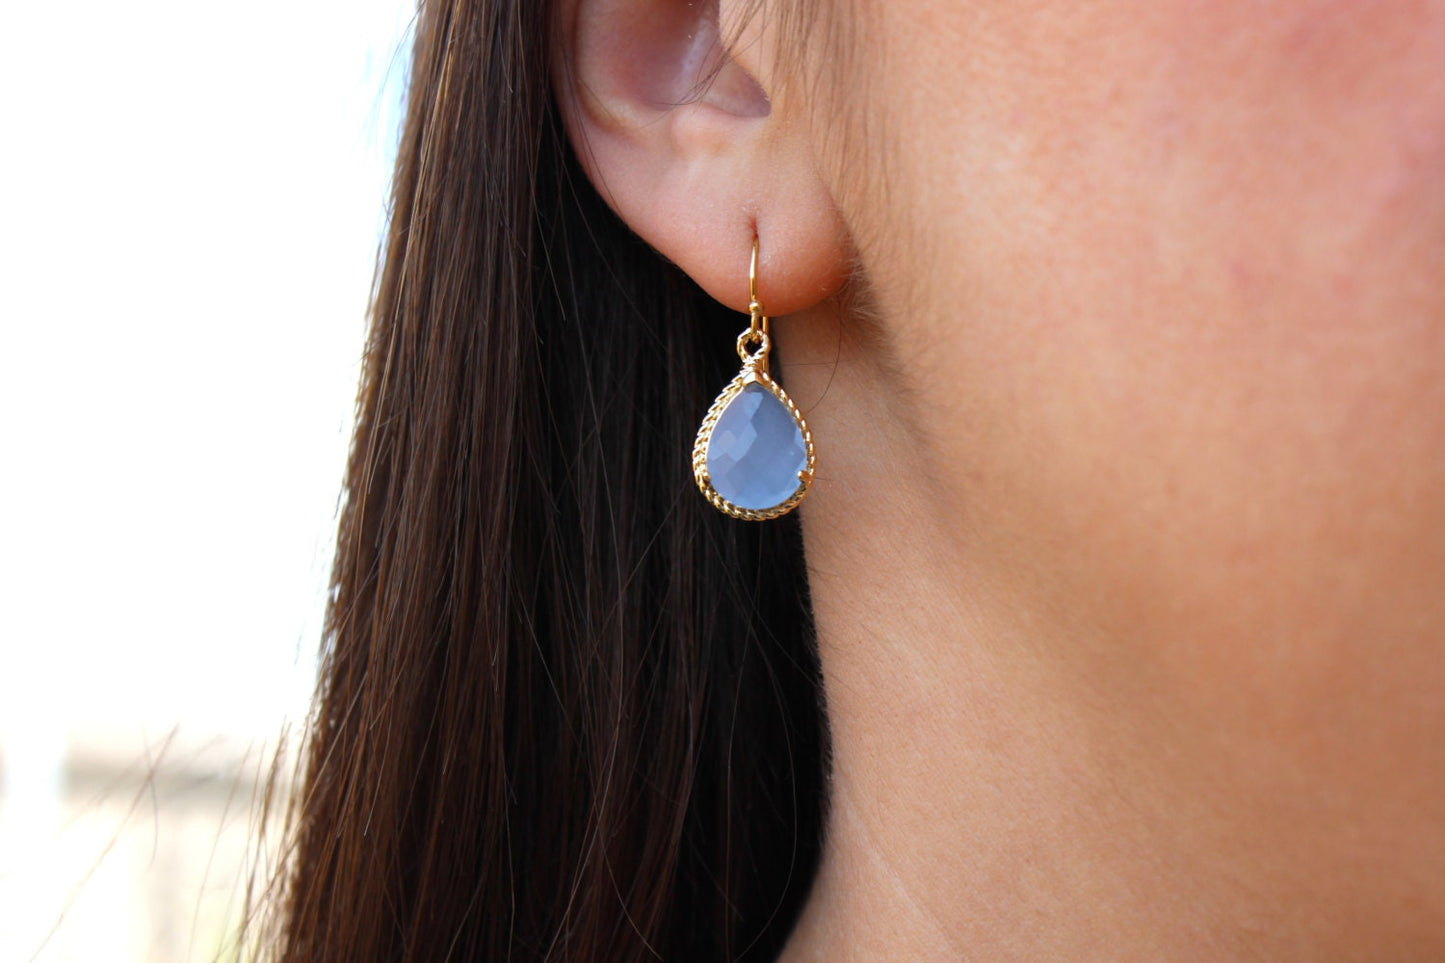 Periwinkle Earrings Gold Lavender Blue Earrings Bridesmaid Earrings Wedding Earrings Bridesmaid Jewelry Gift Wedding Jewelry